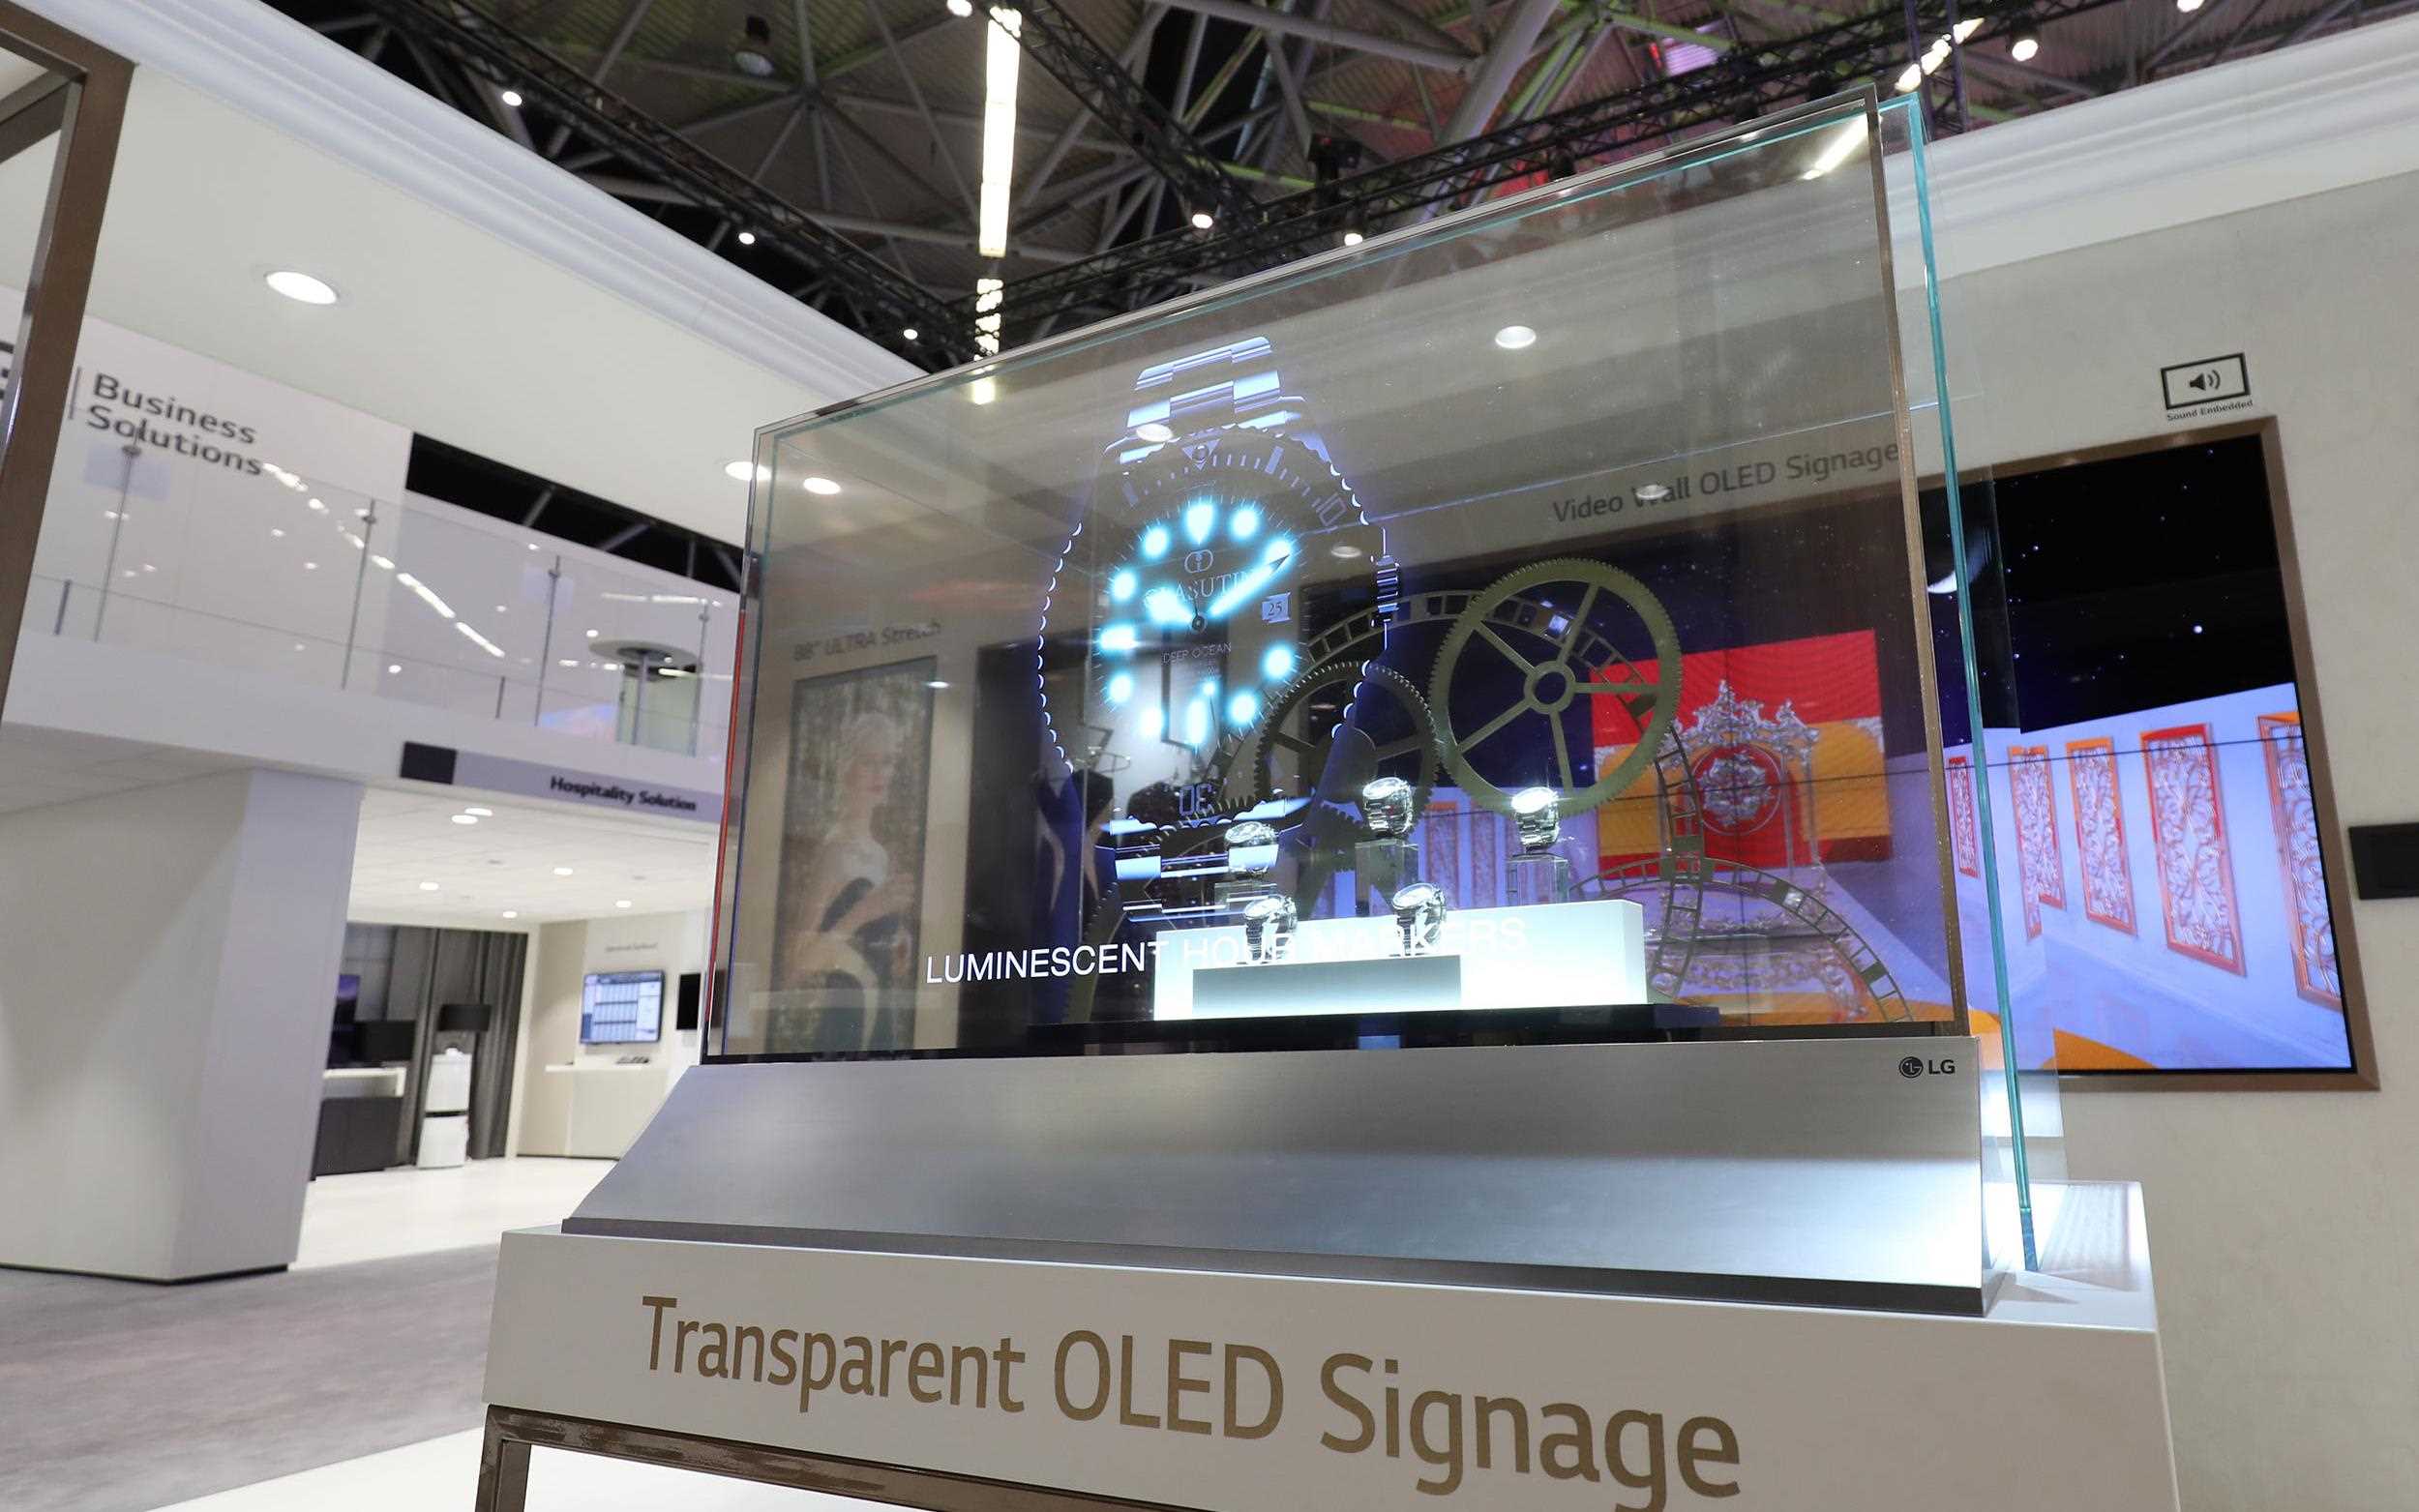 LG Transparent OLED Signage 03.jpg